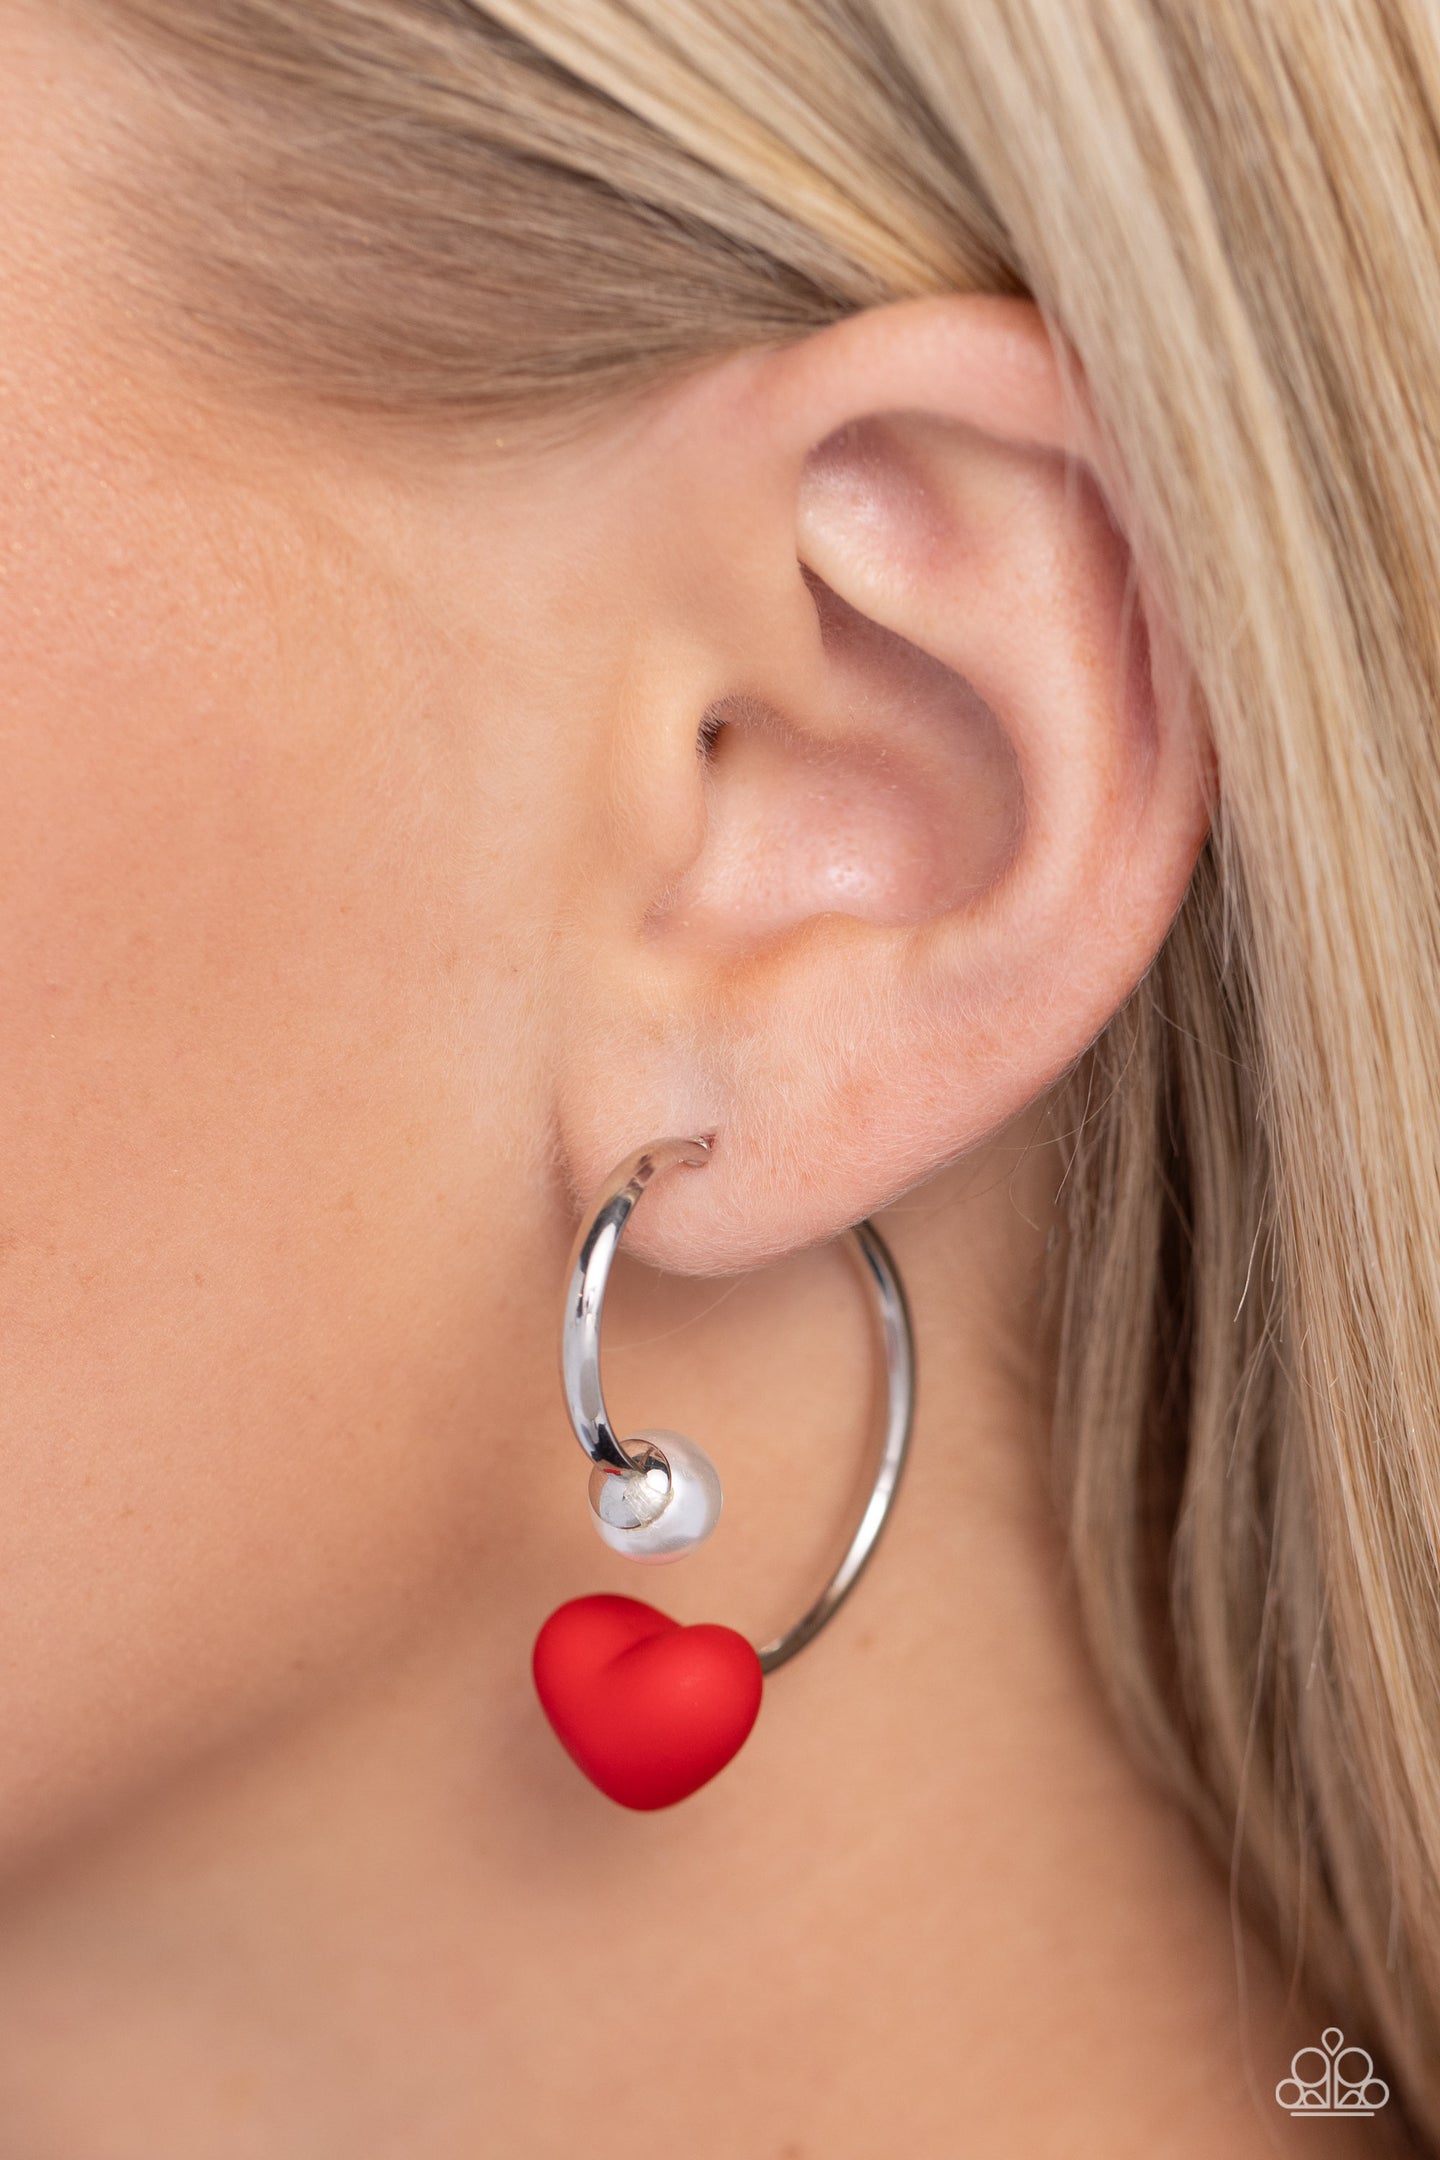 Romantic Representative - Red earrings